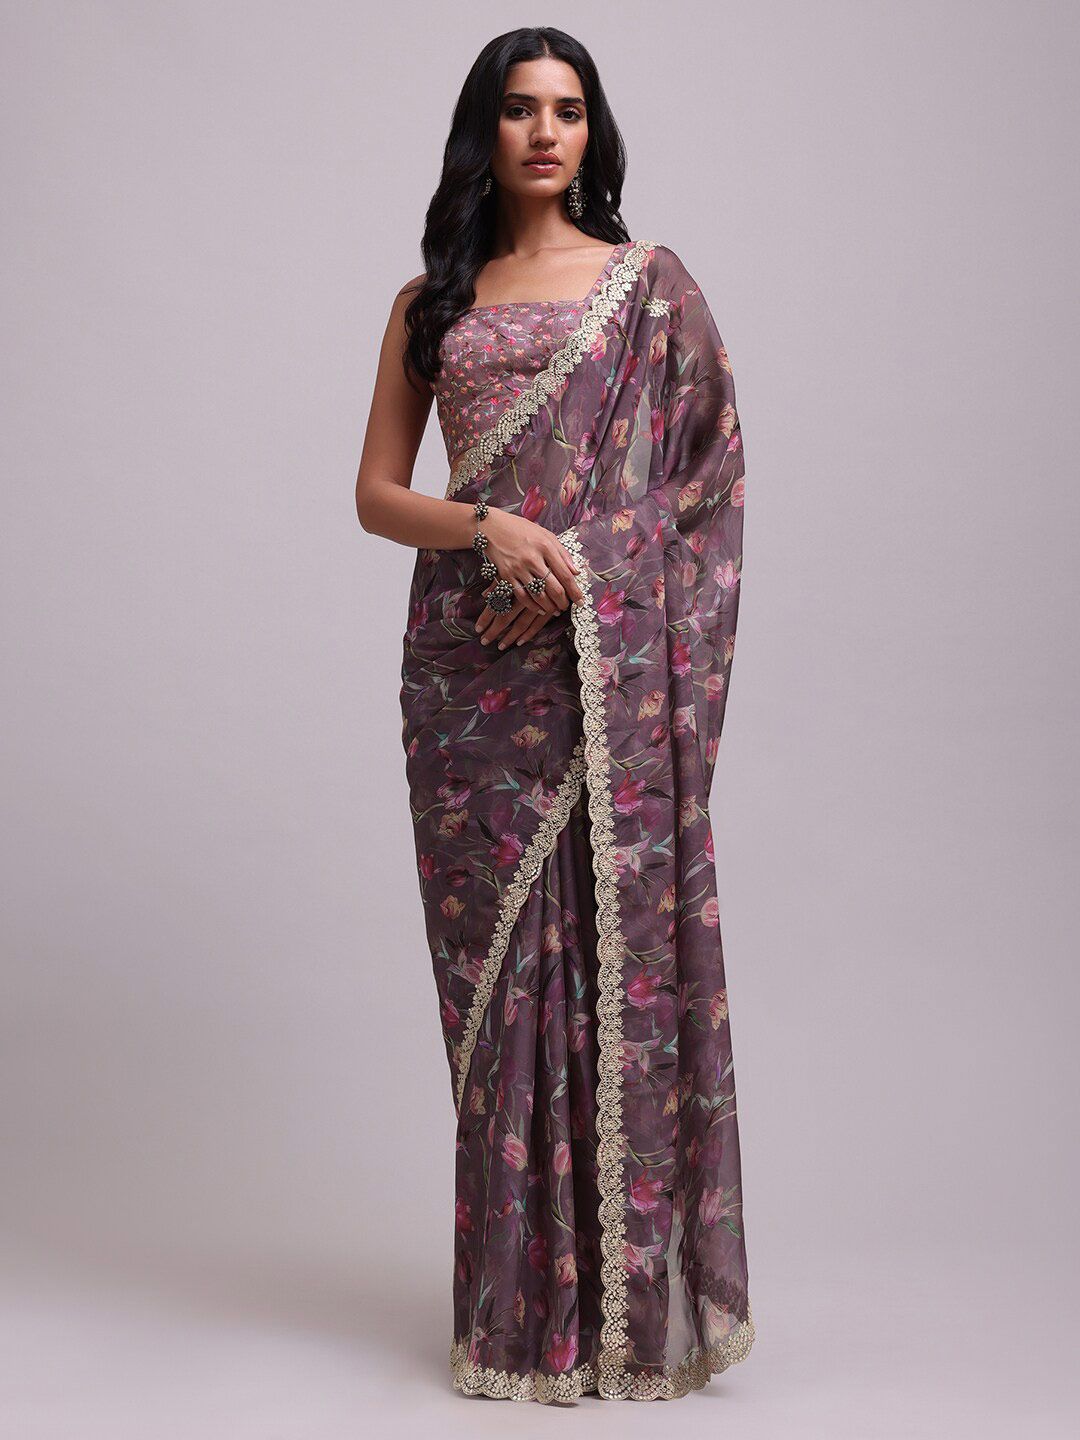 KALKI Fashion Brown & Pink Floral Embroidered Saree Price in India